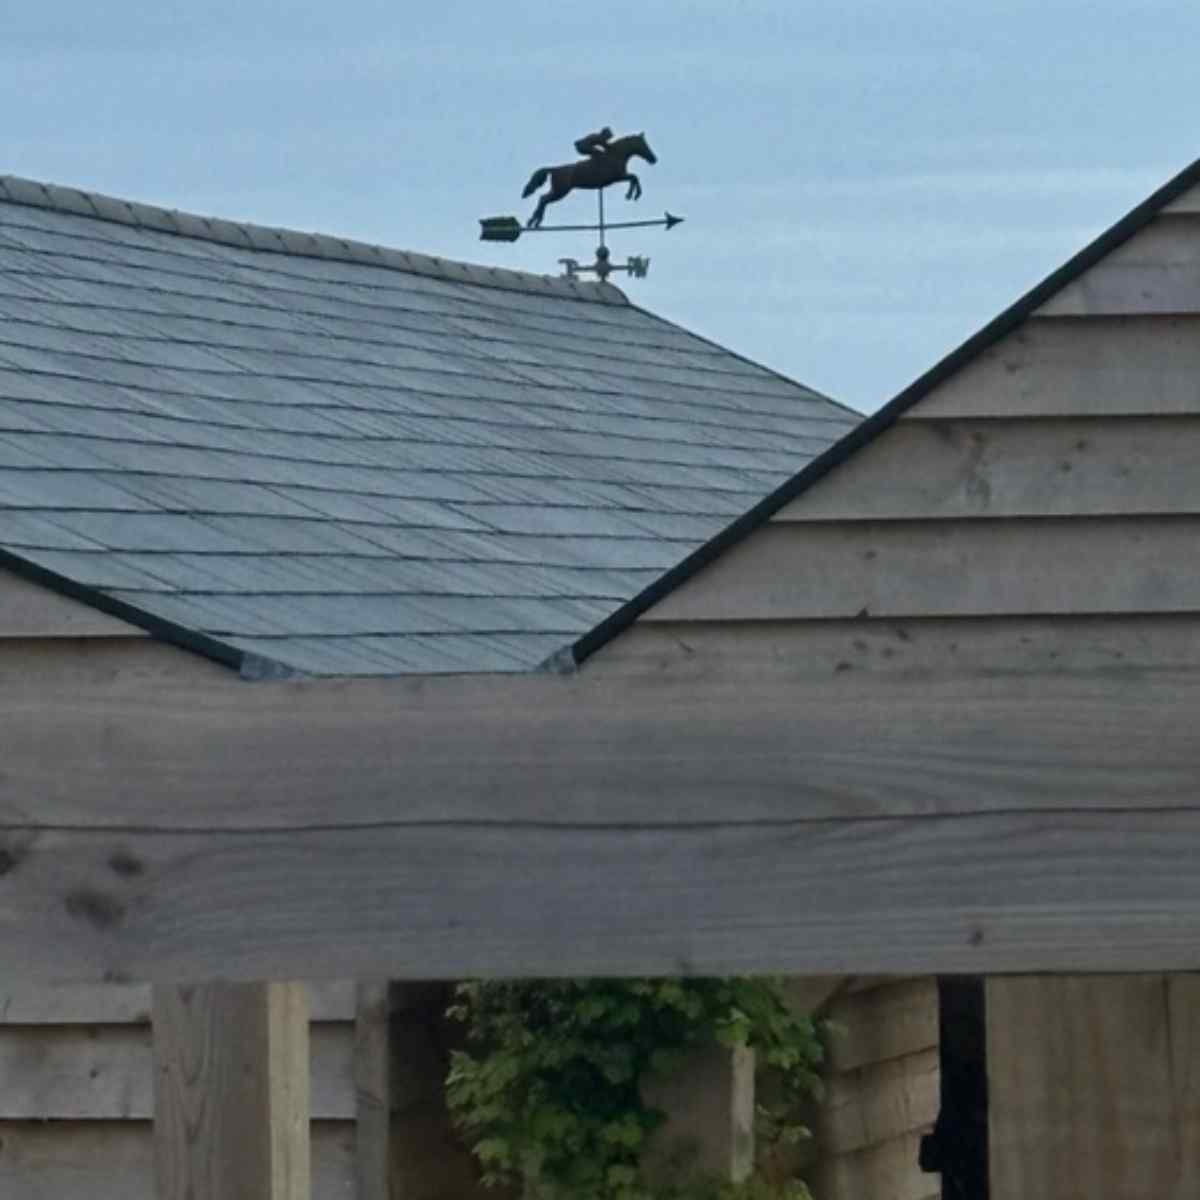 jumping horse weathervane